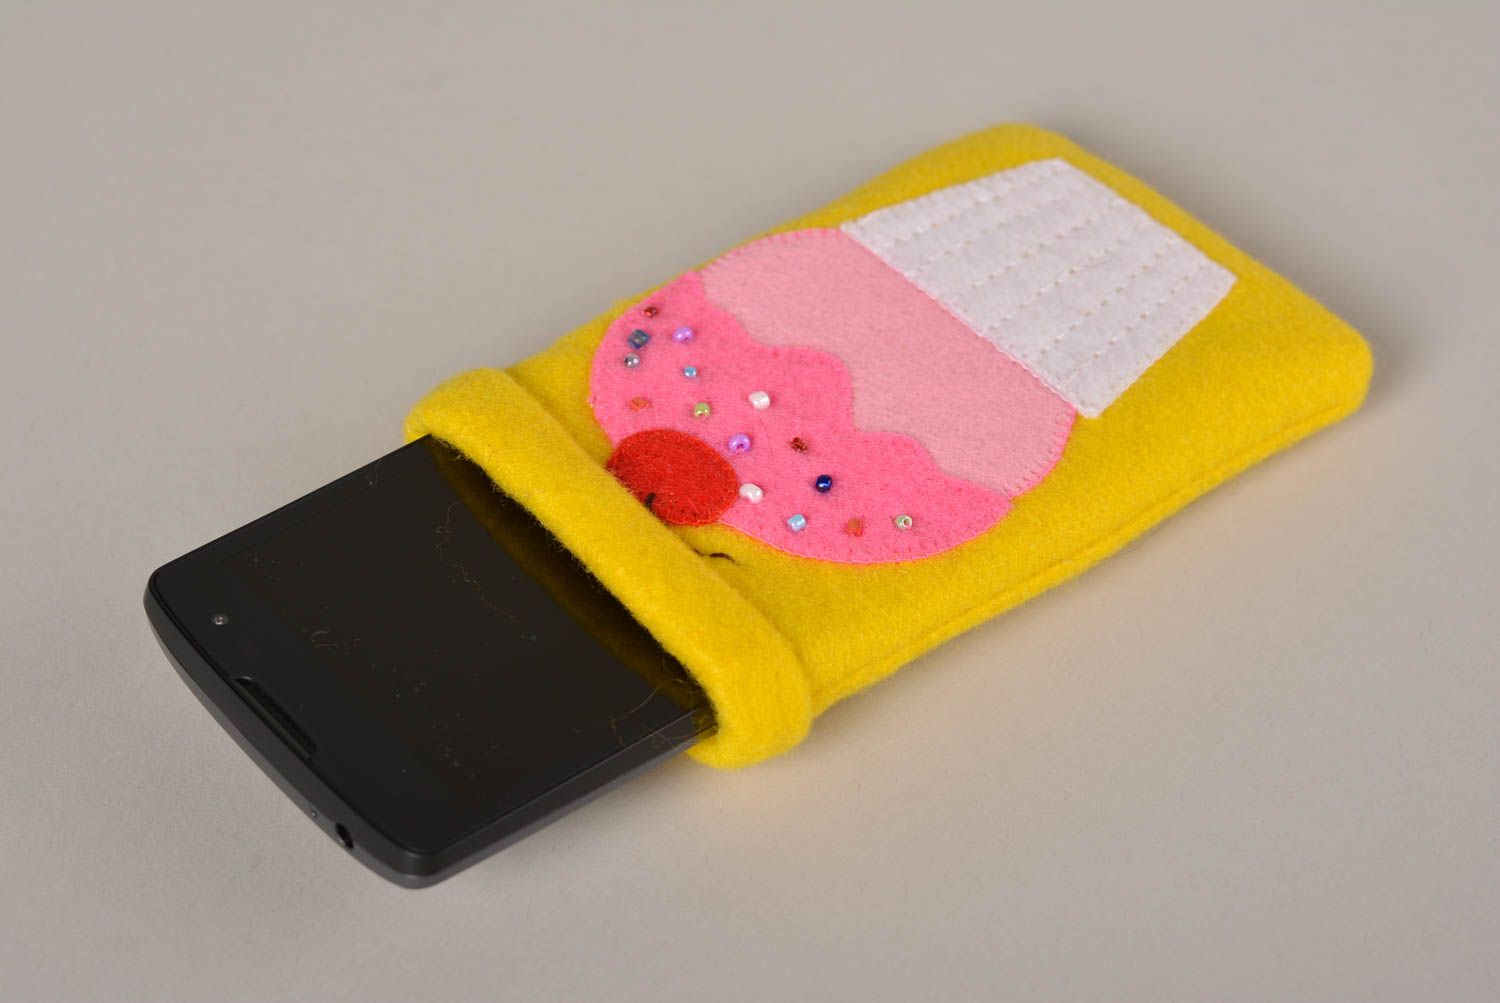 Stylish handmade textile phone case gadget case design gift ideas for kids photo 2